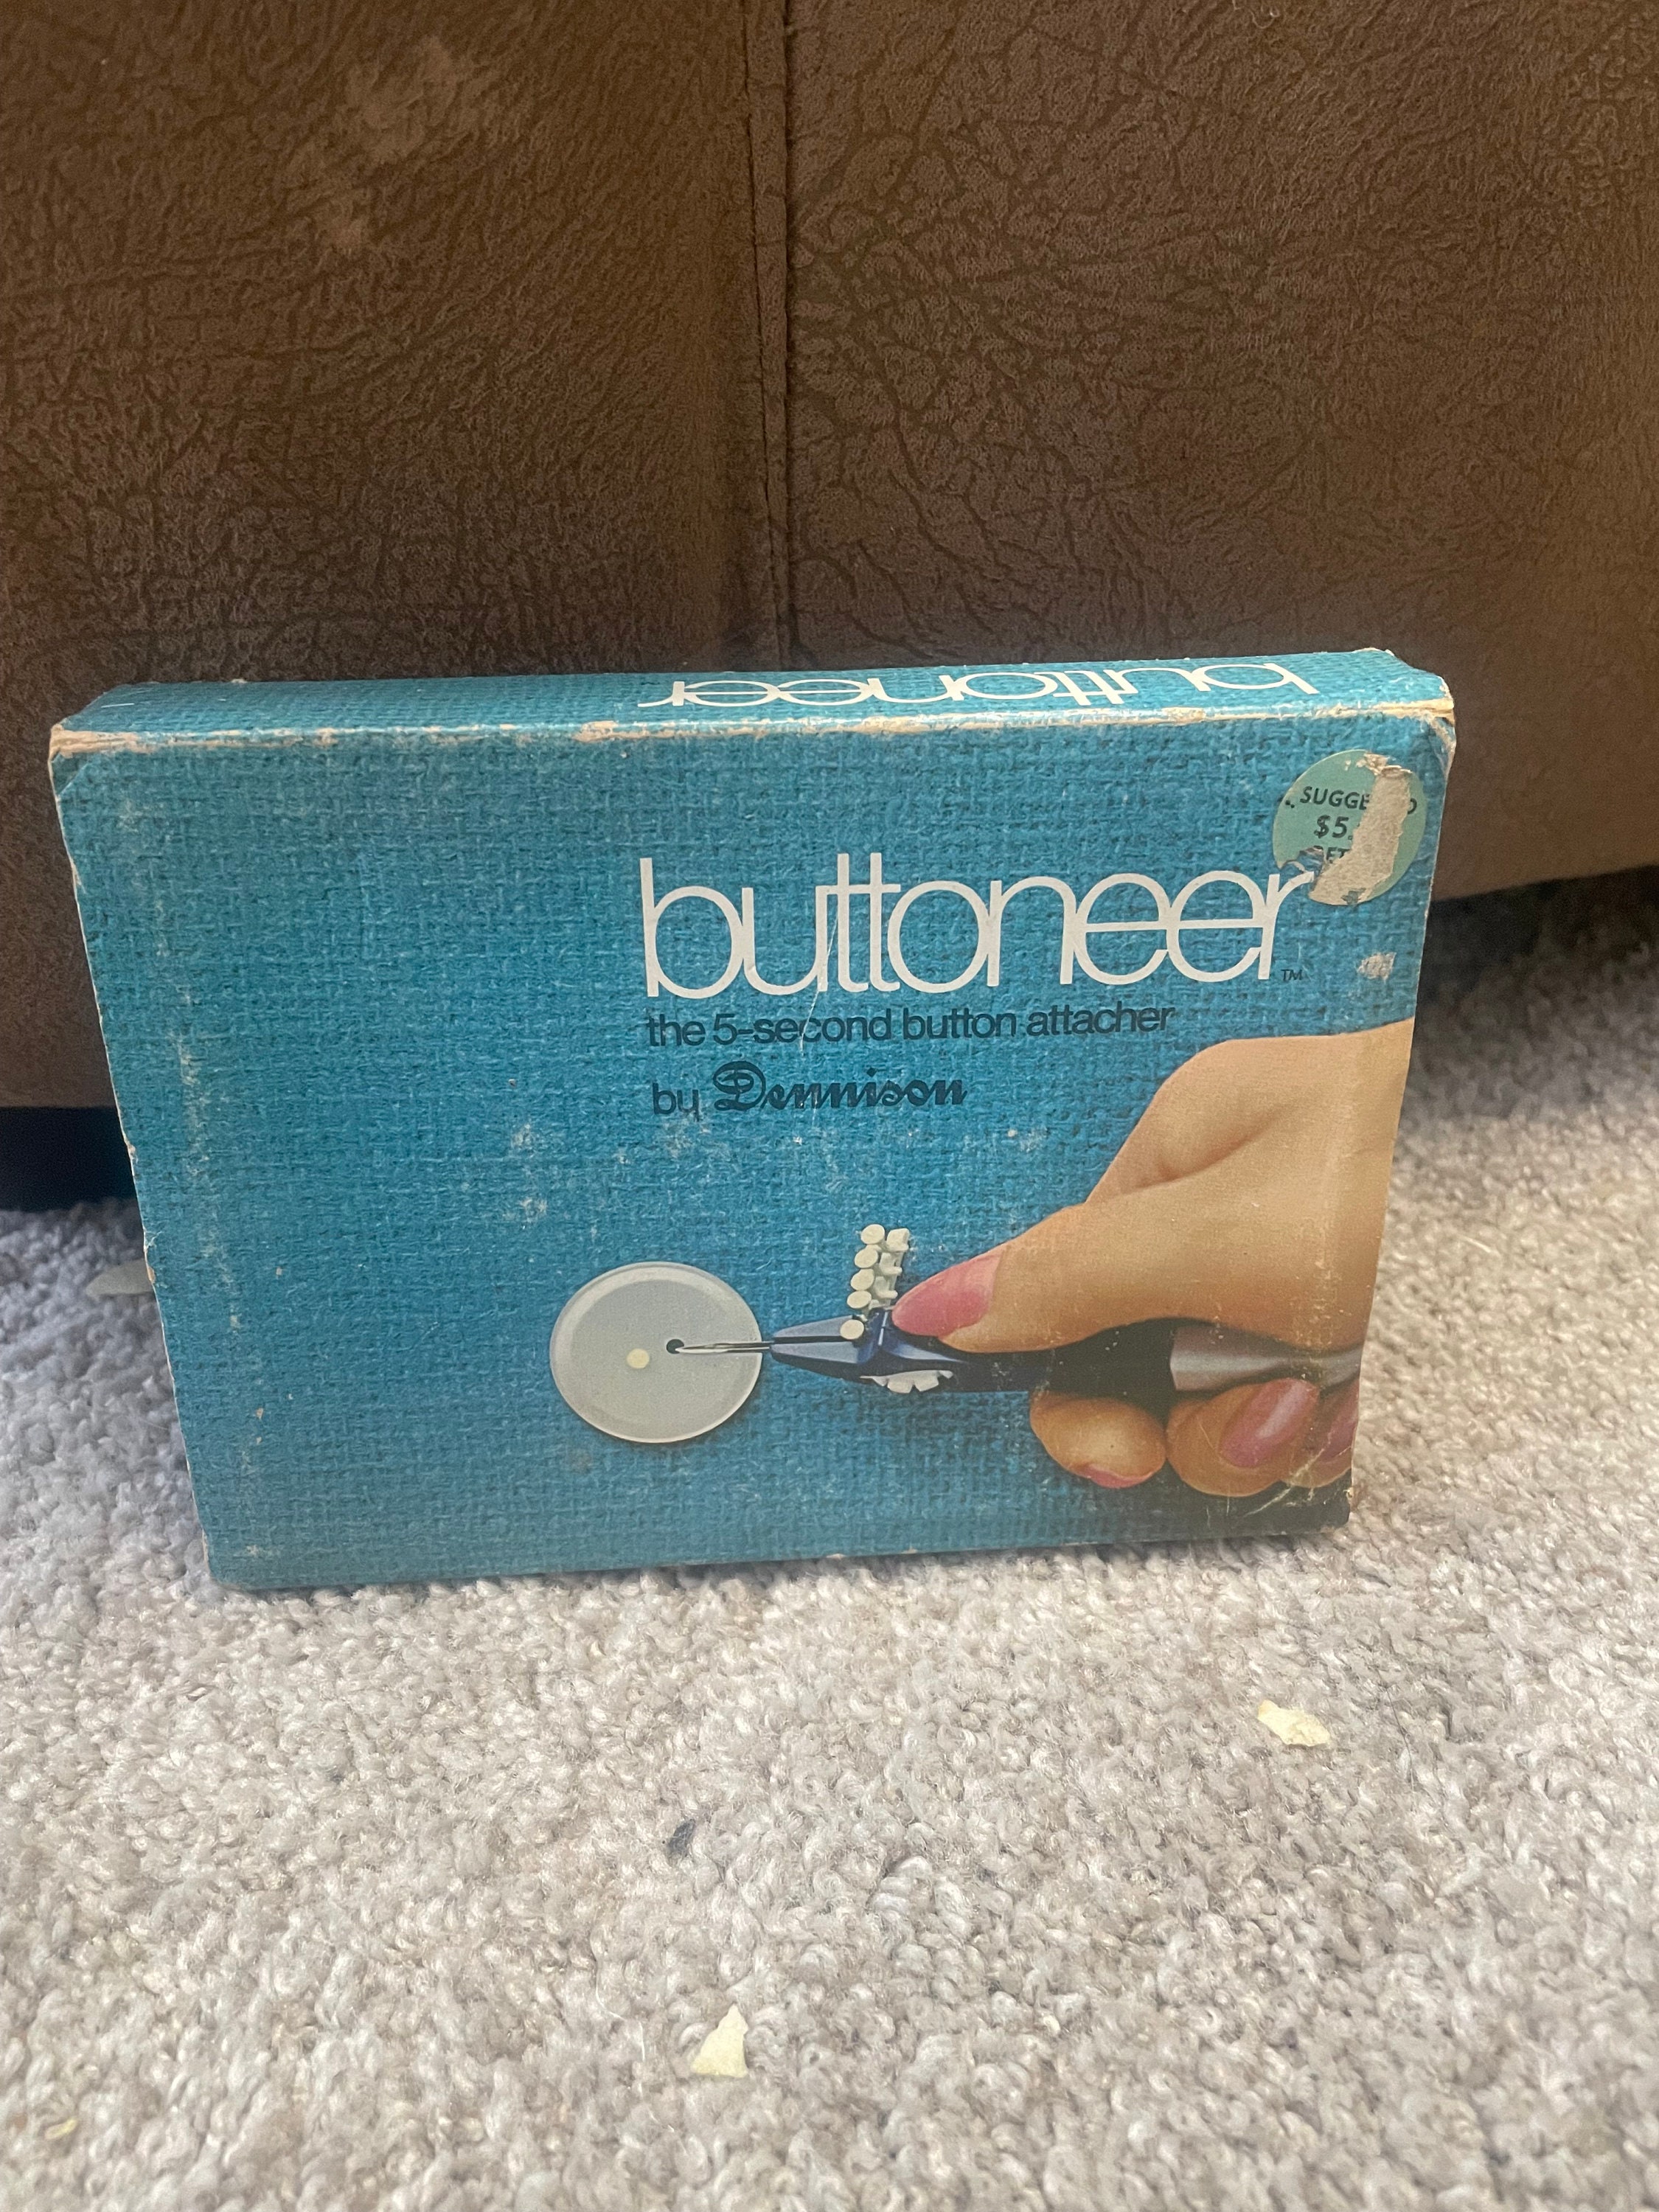 Vintage Dennison Buttoneer 5 Second Button Attacher Kit Stock No